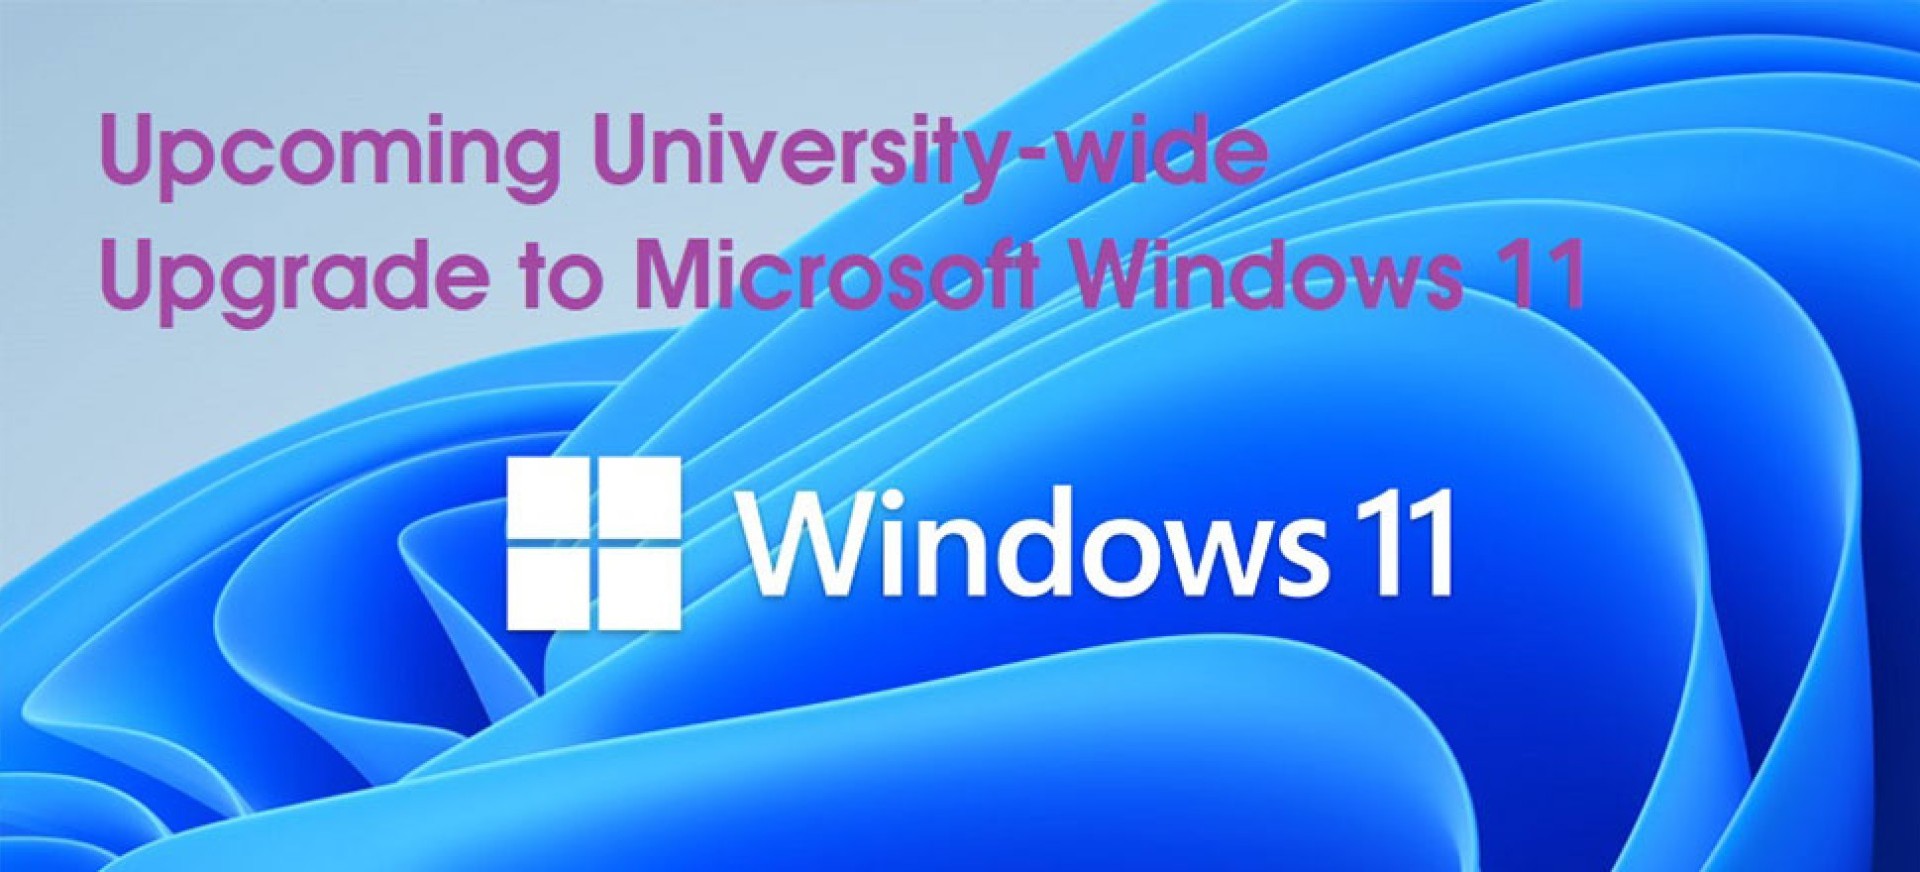 Upcoming University-wide Upgrade to Microsoft Windows 11